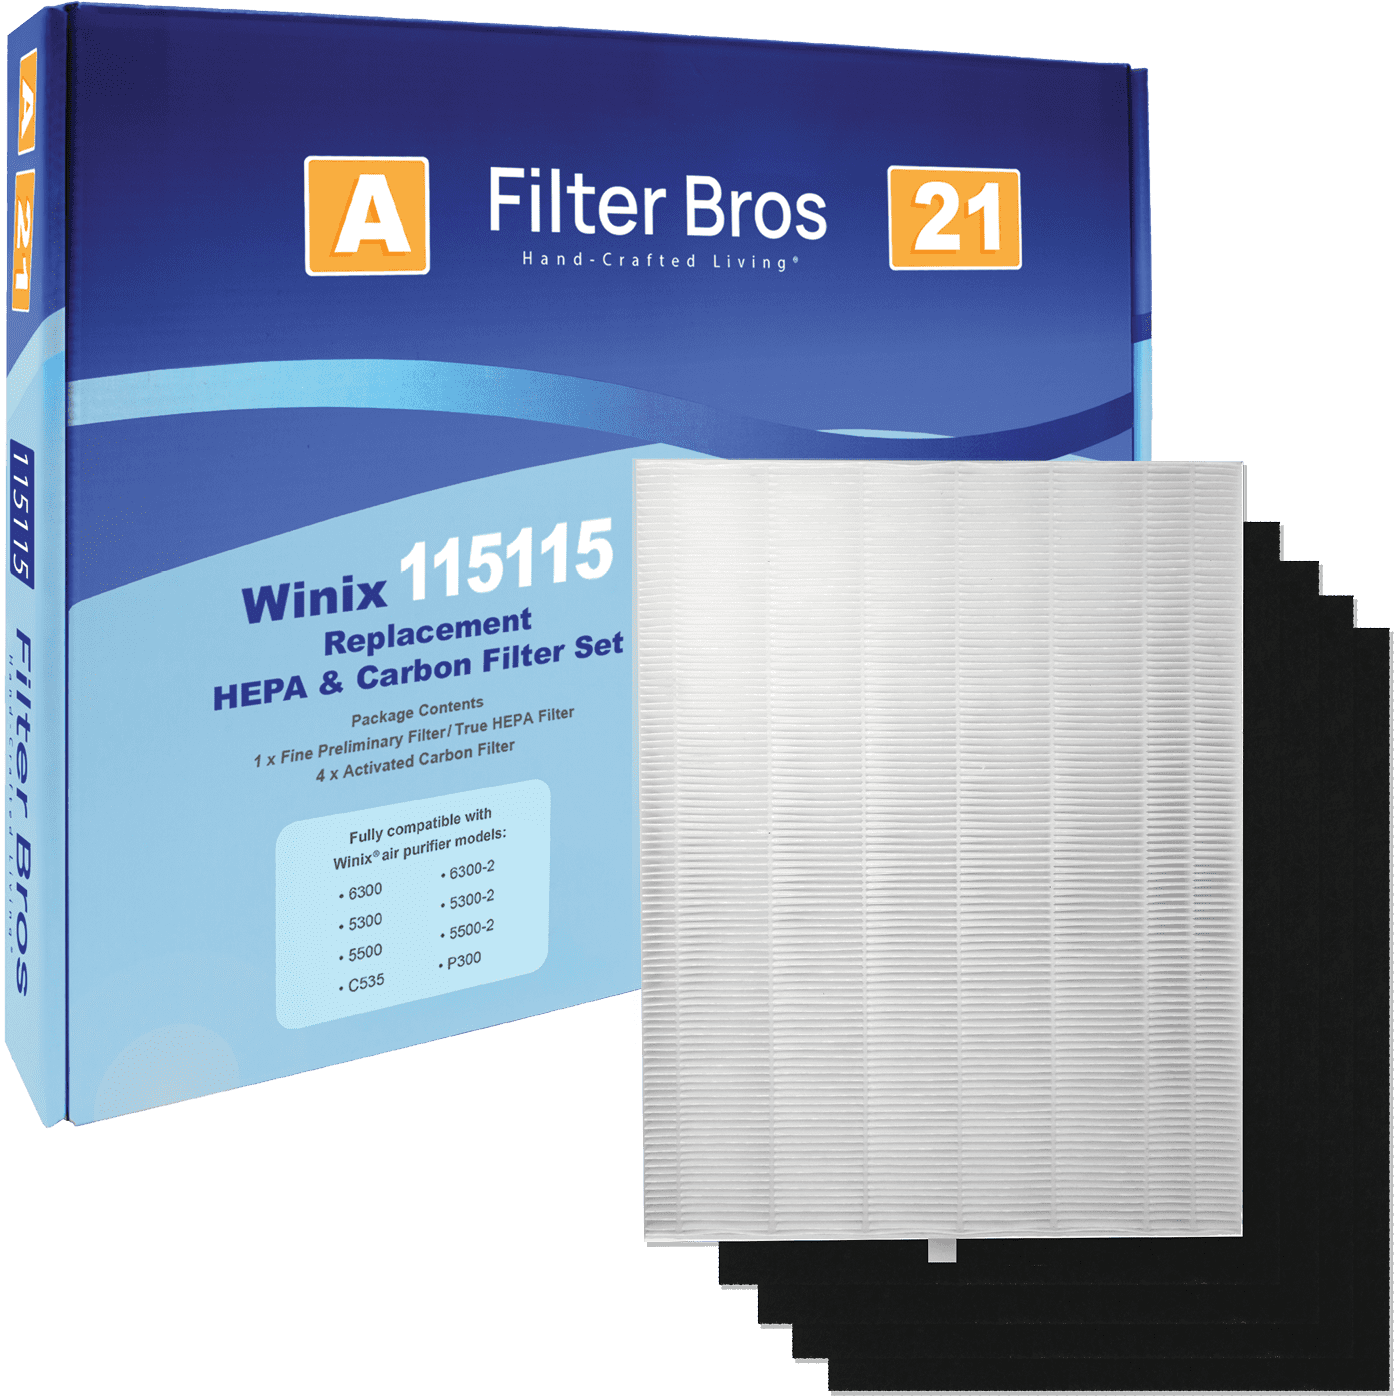 5x Replace Filter Set For Winix Air Purifier P300 U300 9500 9000 6300 5300 